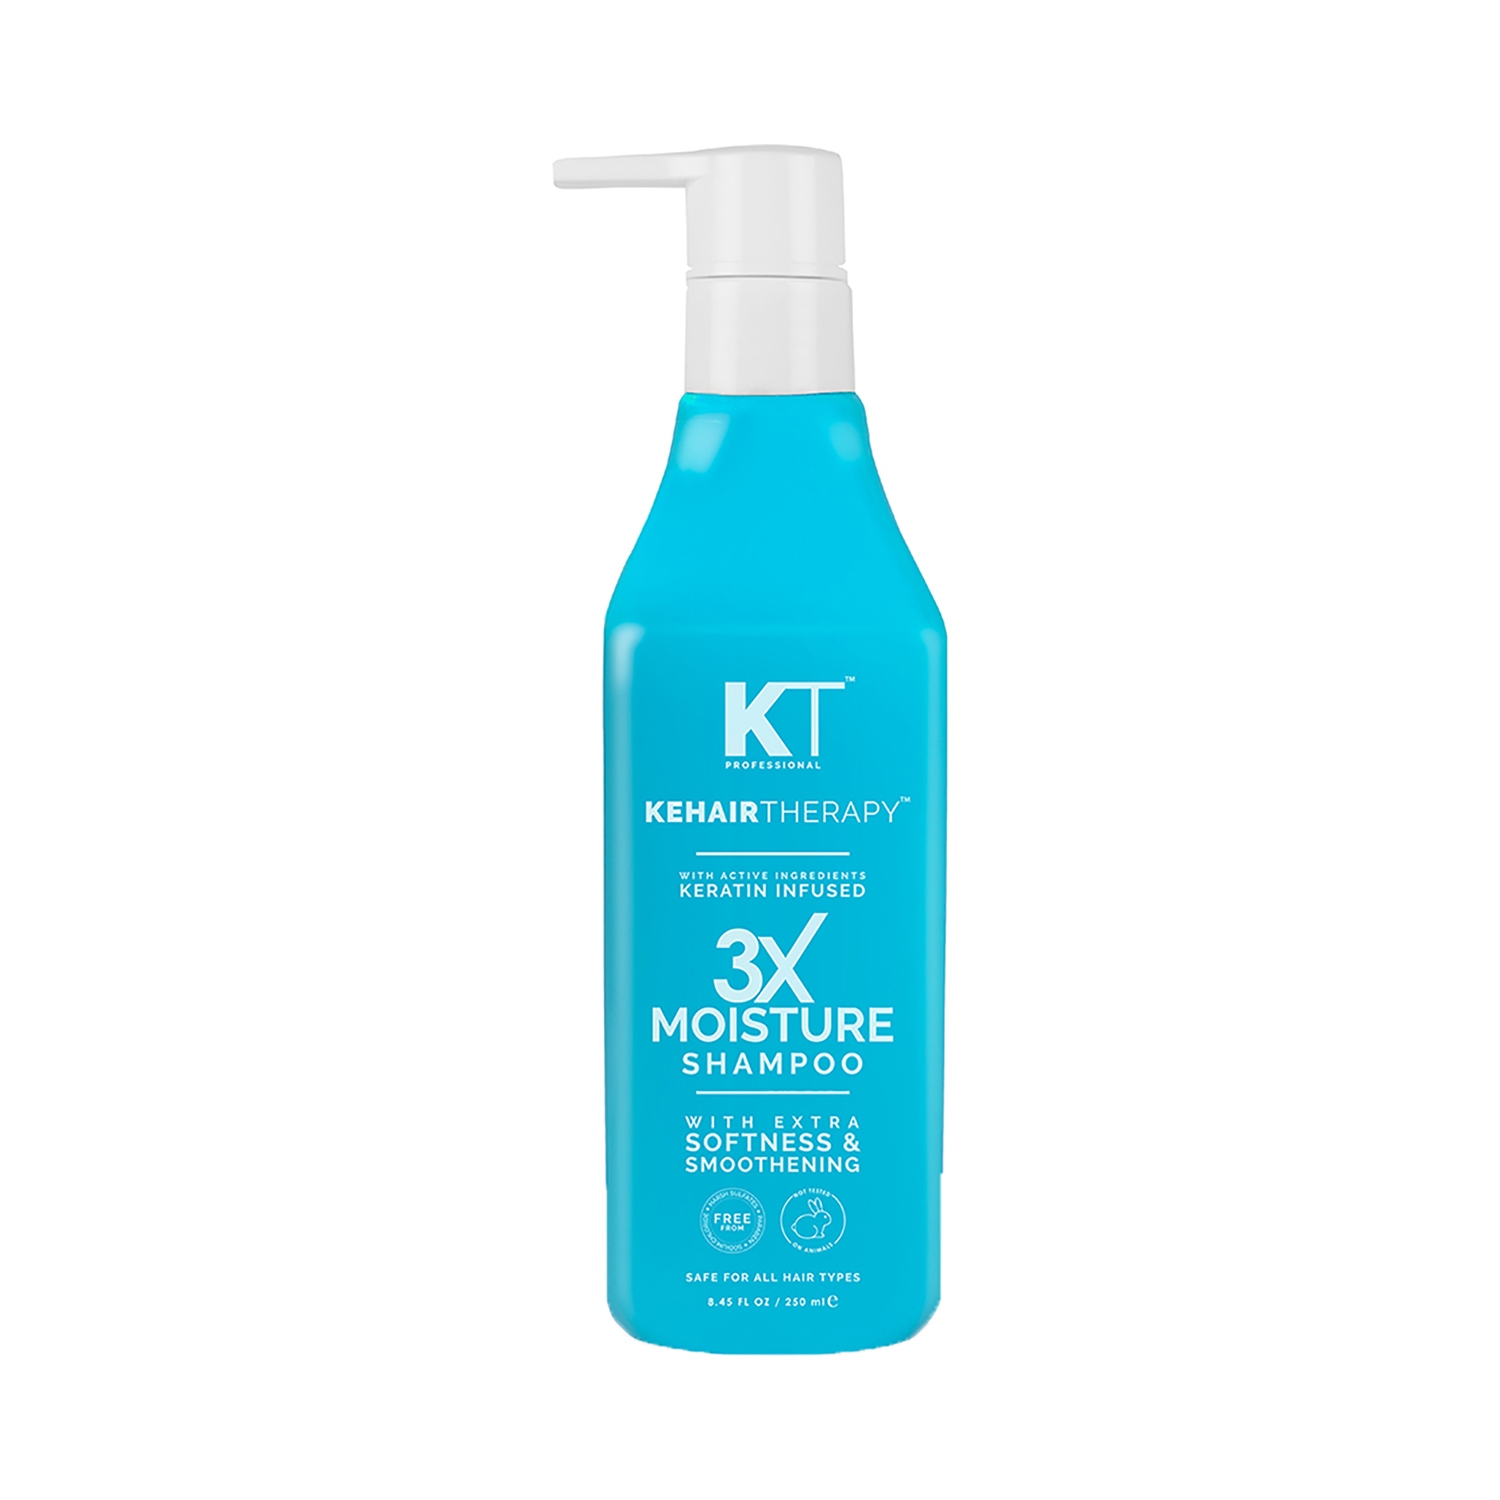 KT Professional | KT Professional Kehairtherapy 3X Moisture Shampoo (250ml)